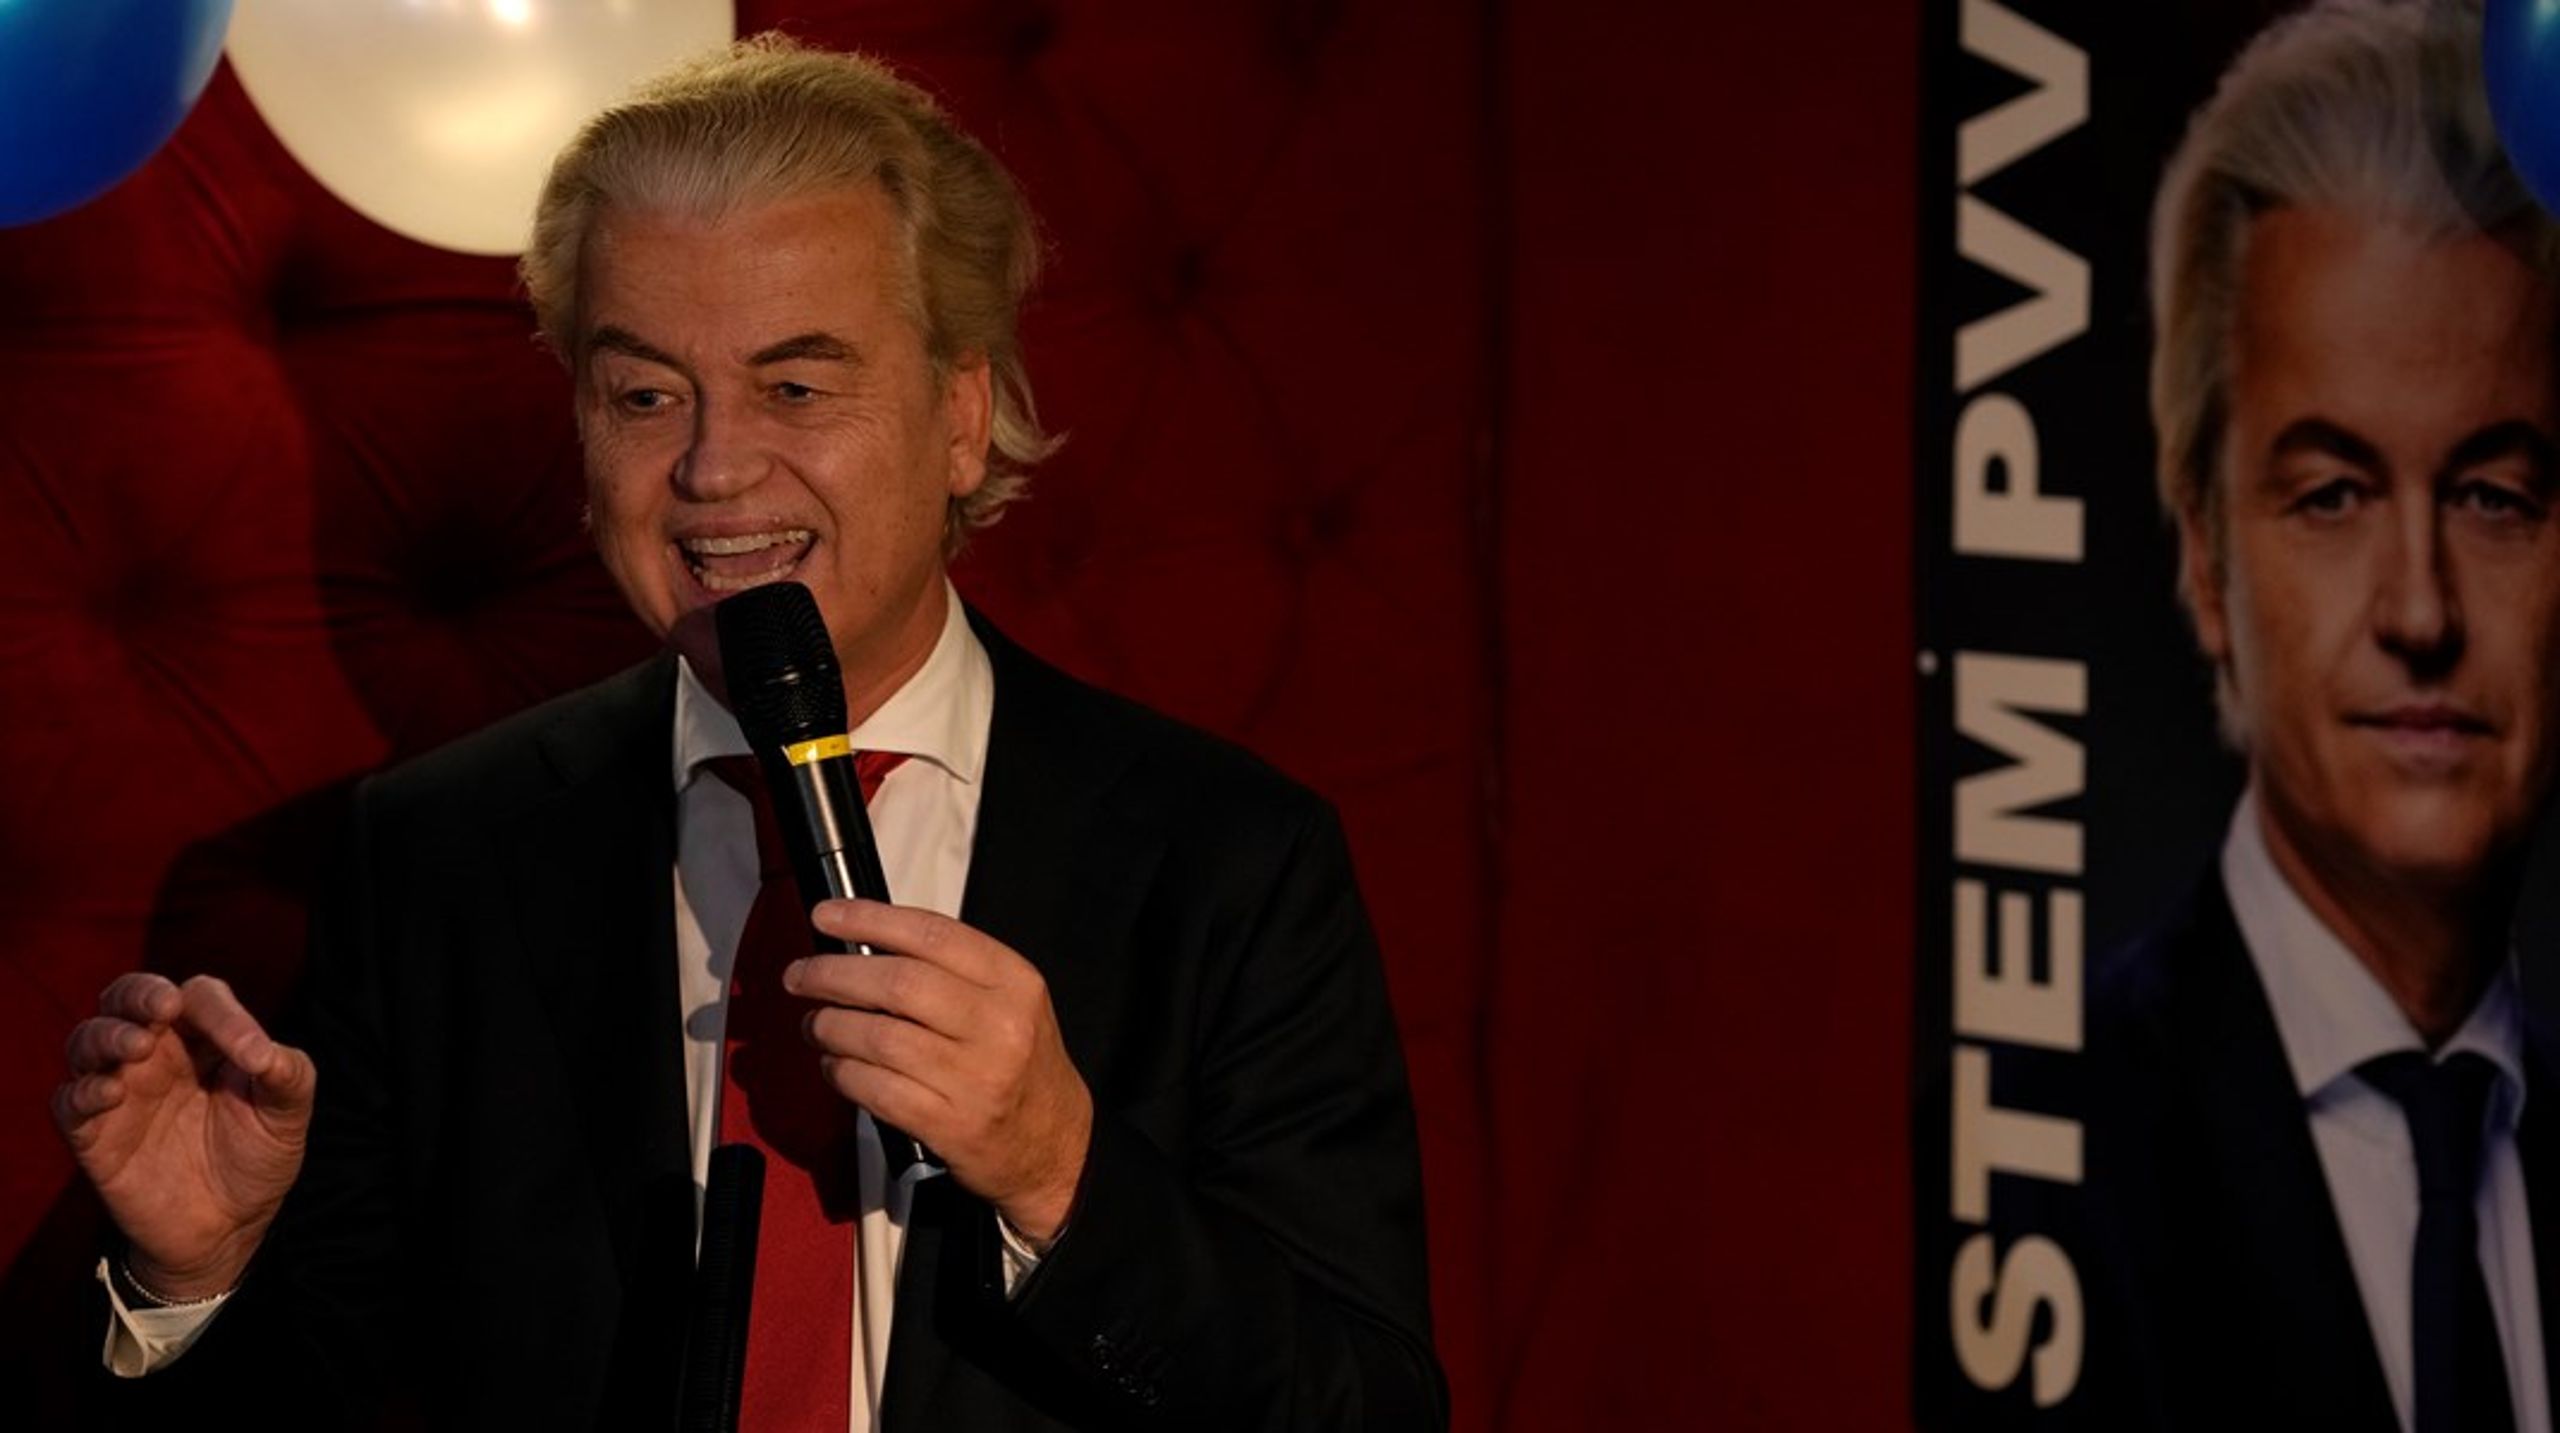 60-årige Geert Wilders har aldrig været i regering trods 25 år i parlamentet. Med gårsdagens valgresultat kan hans magtpolitiske tørketiden være forbi.